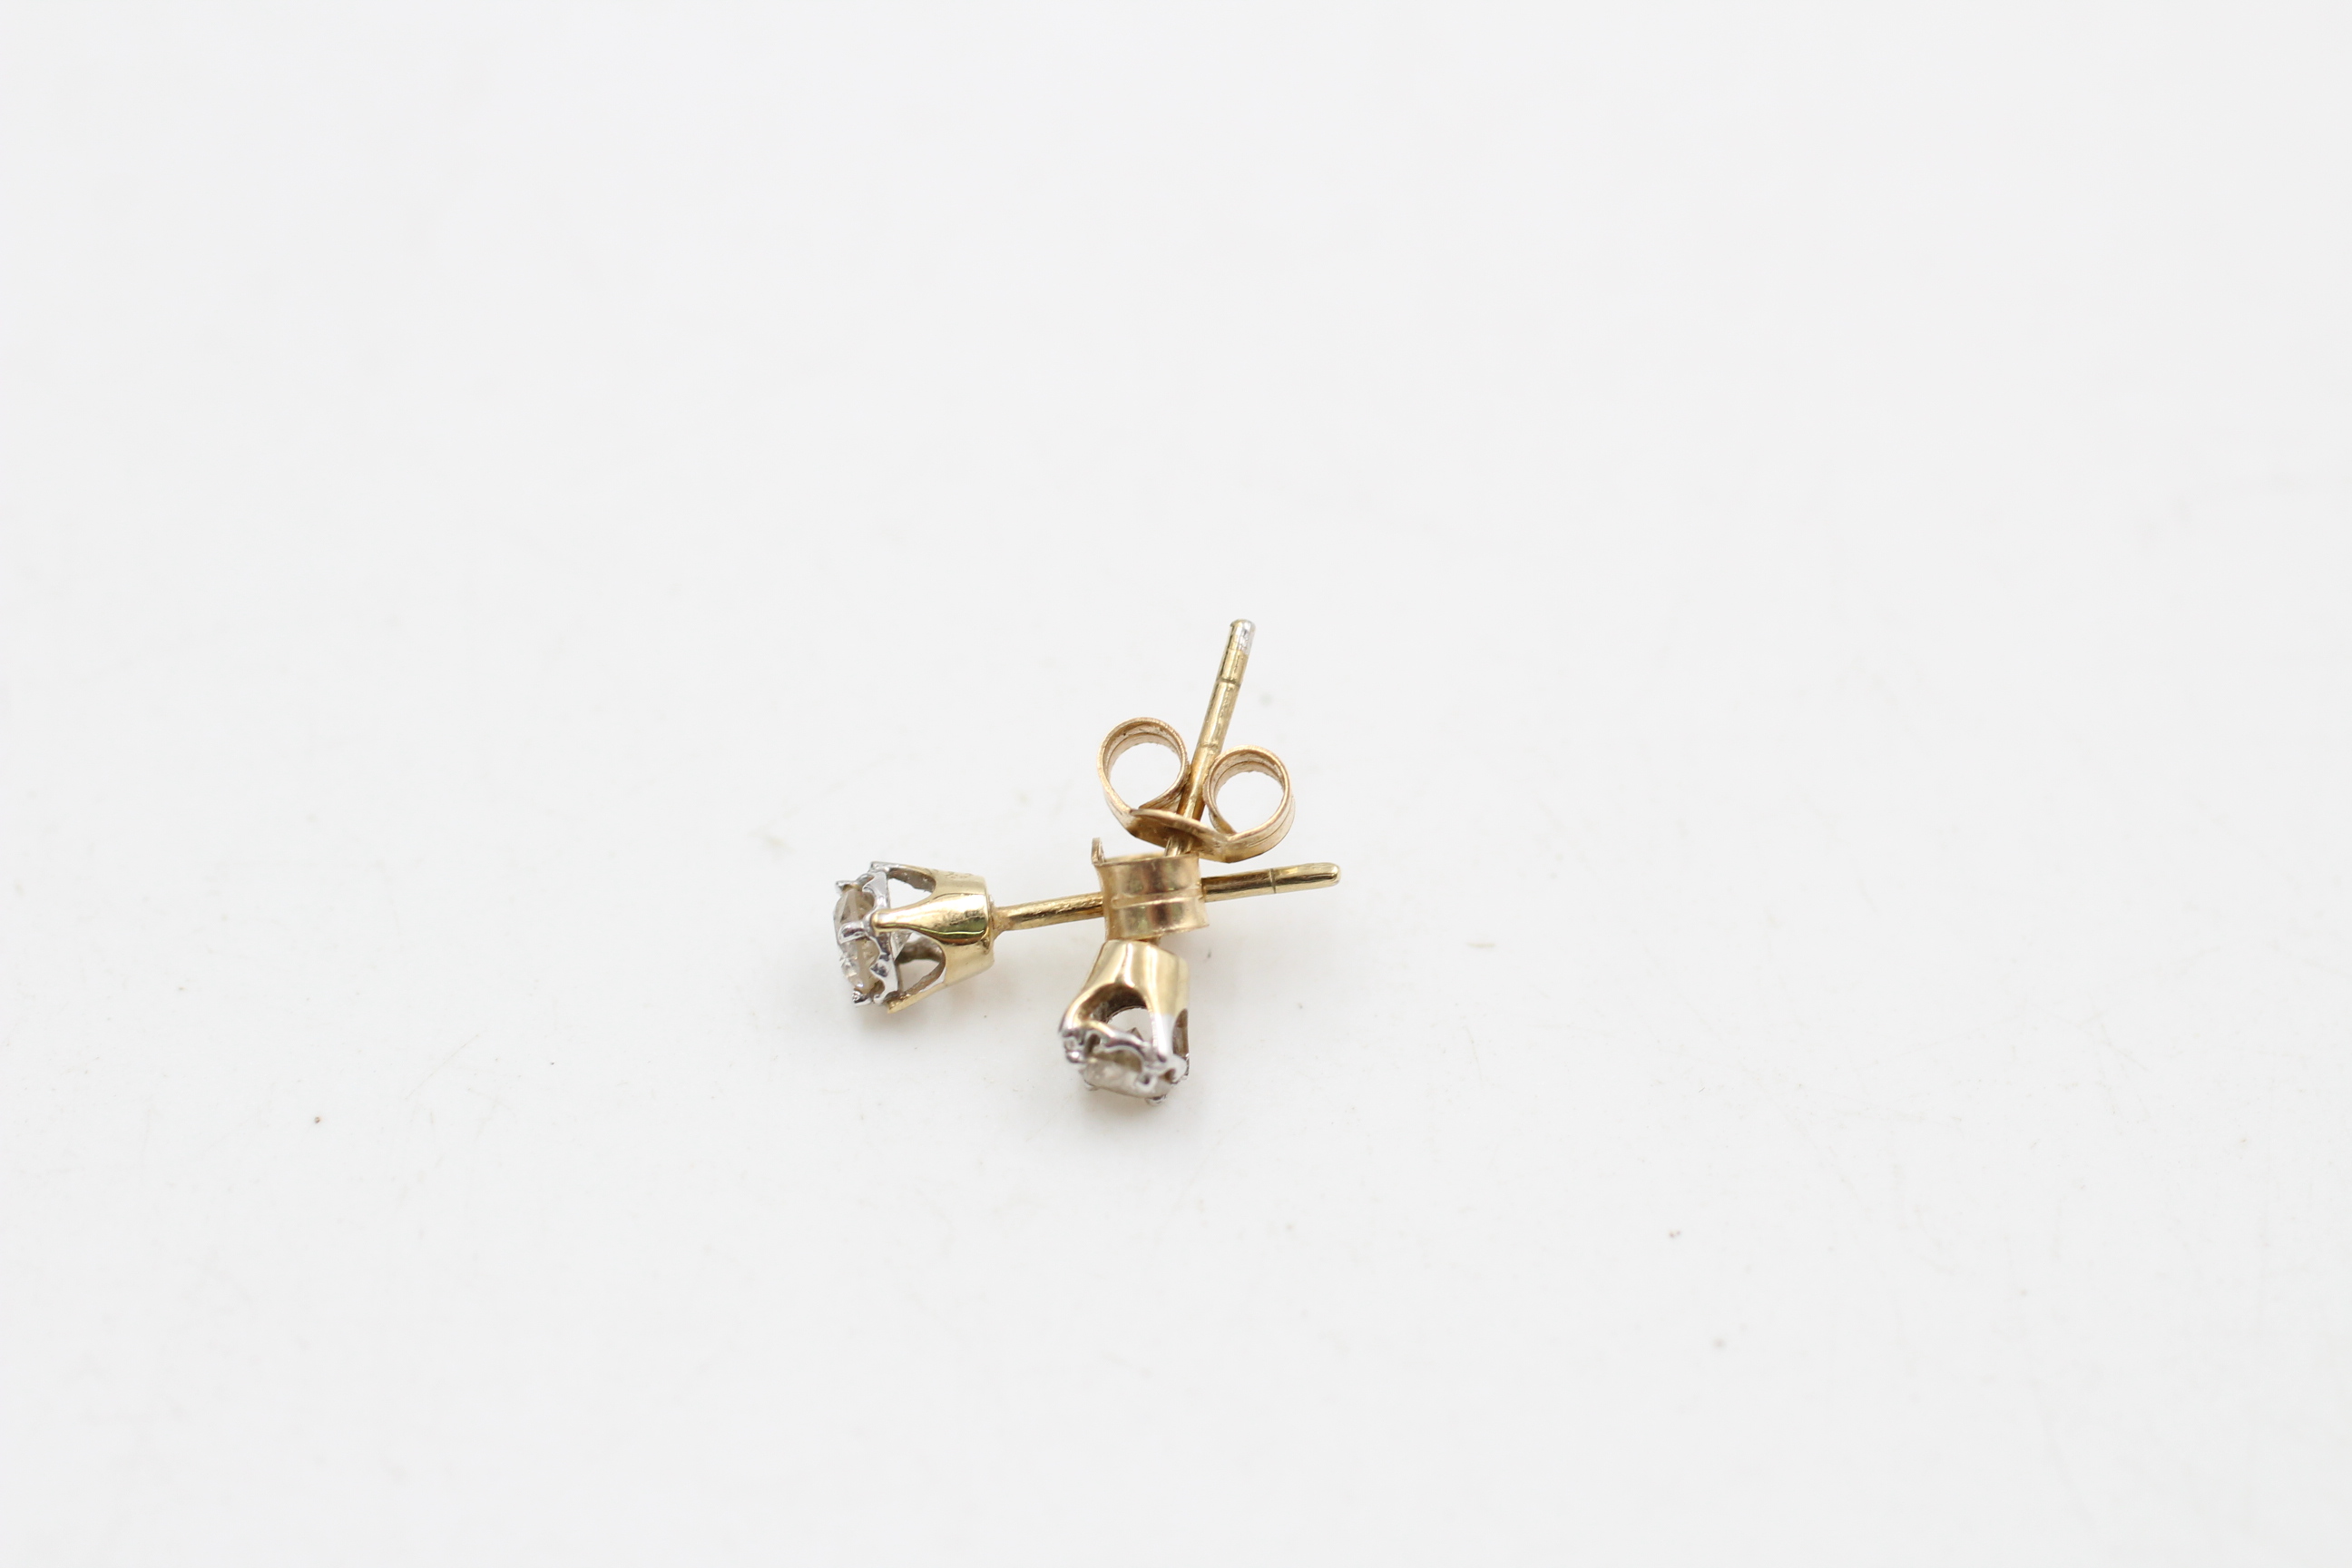 9ct gold diamond stud earrings (0.7g) - Image 4 of 4